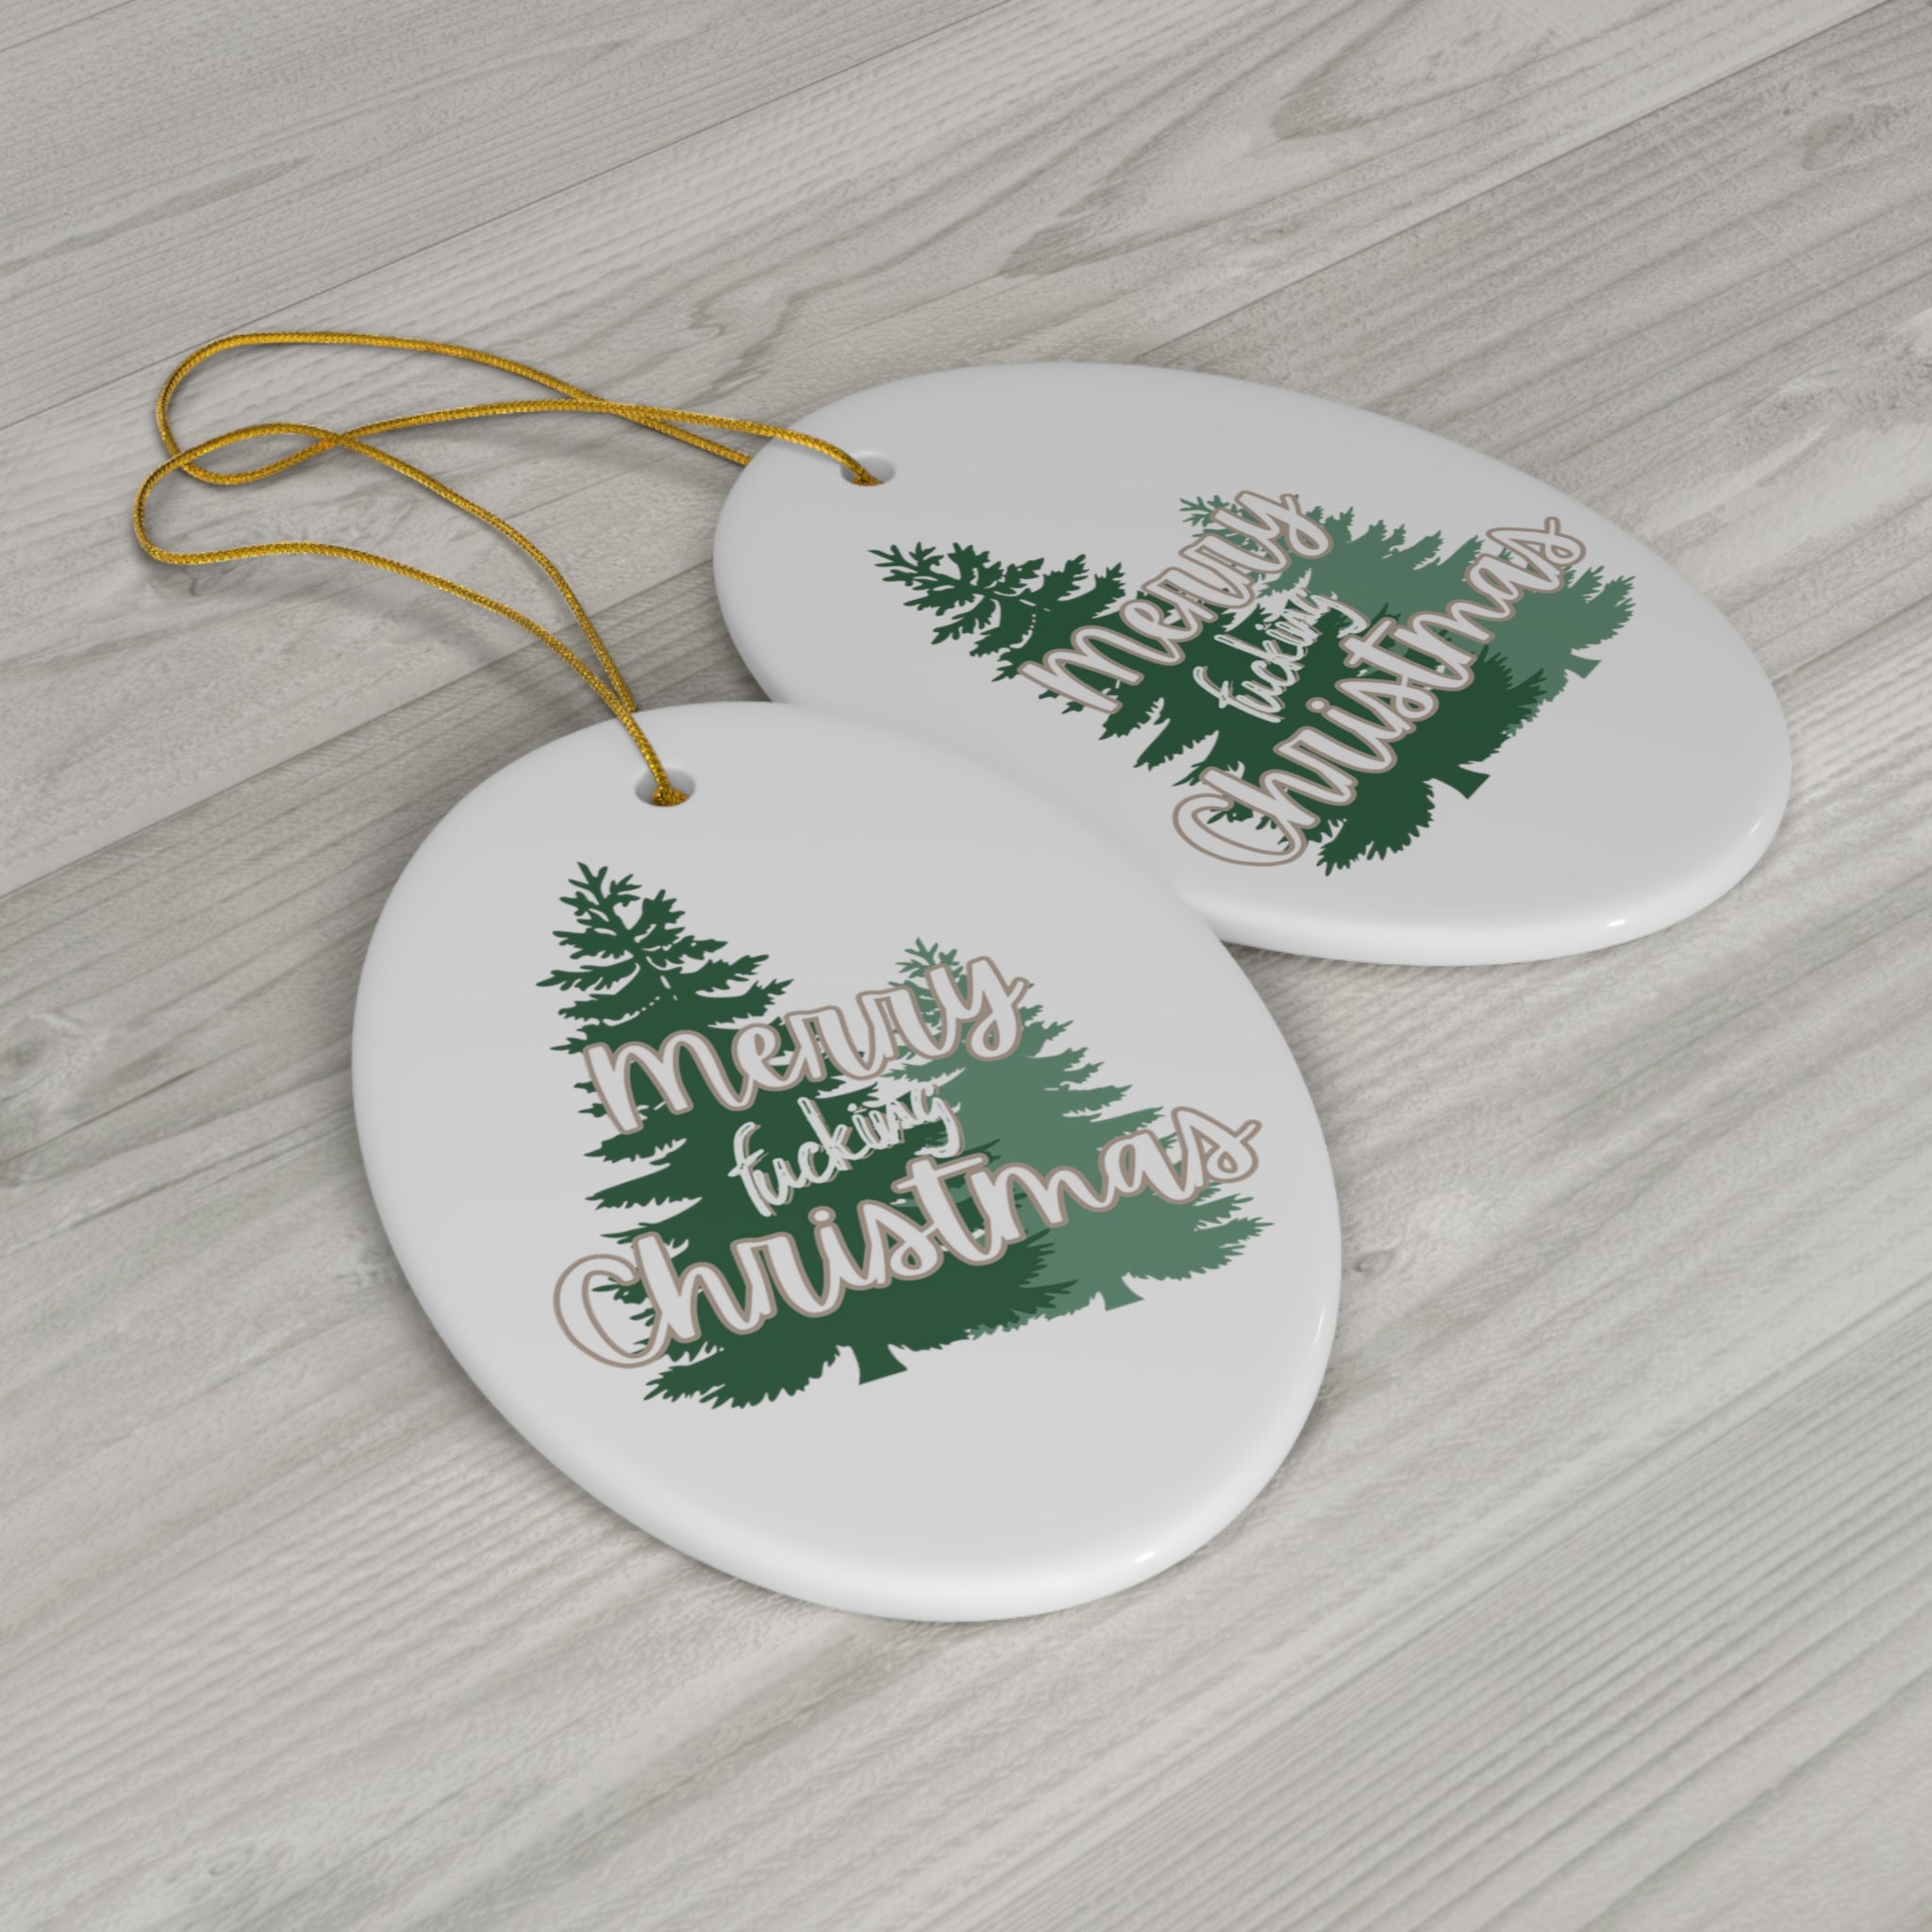  Merry Fucking Christmas (Green Trees) Ceramic Ornament, Sweary Christmas Ornament, Funny Porcelain Decoration, Holiday Decor Home Decor